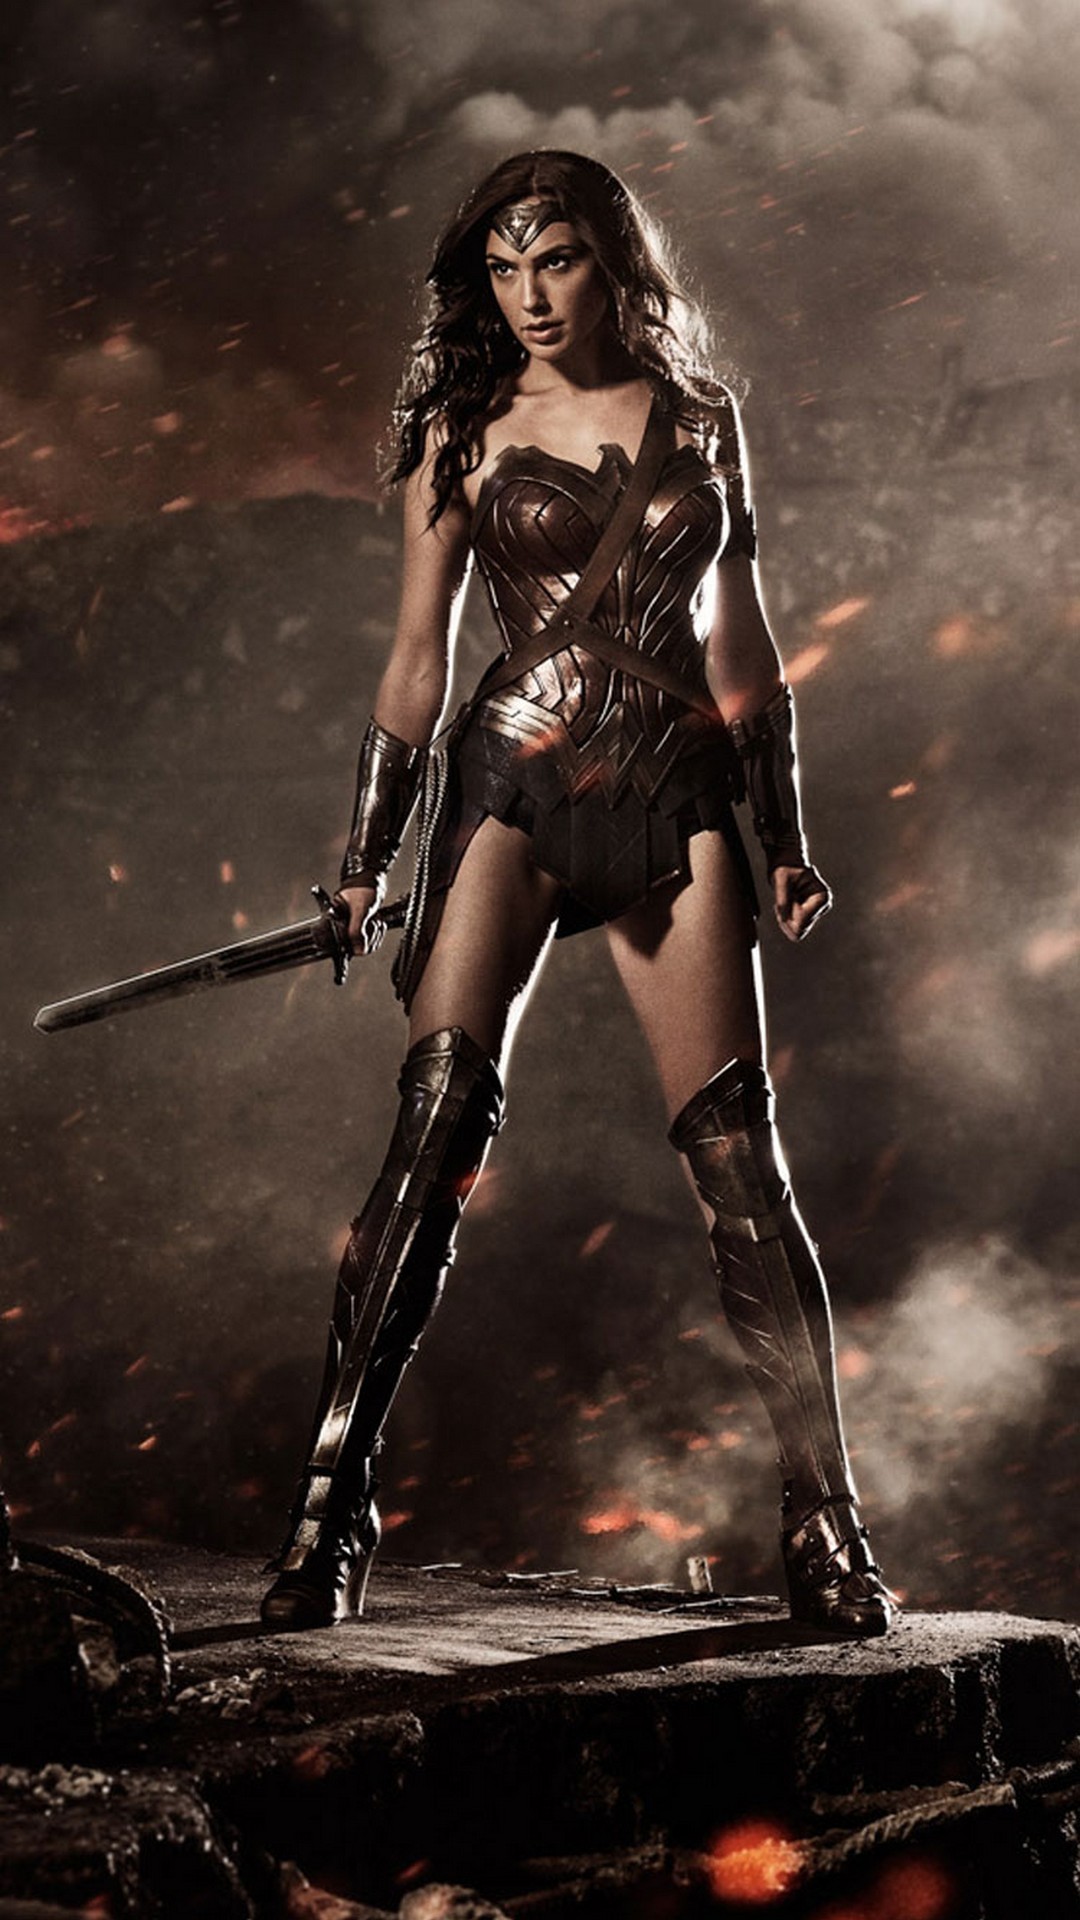 1080x1920 Wonder Woman iPhone Wallpaper resolution 